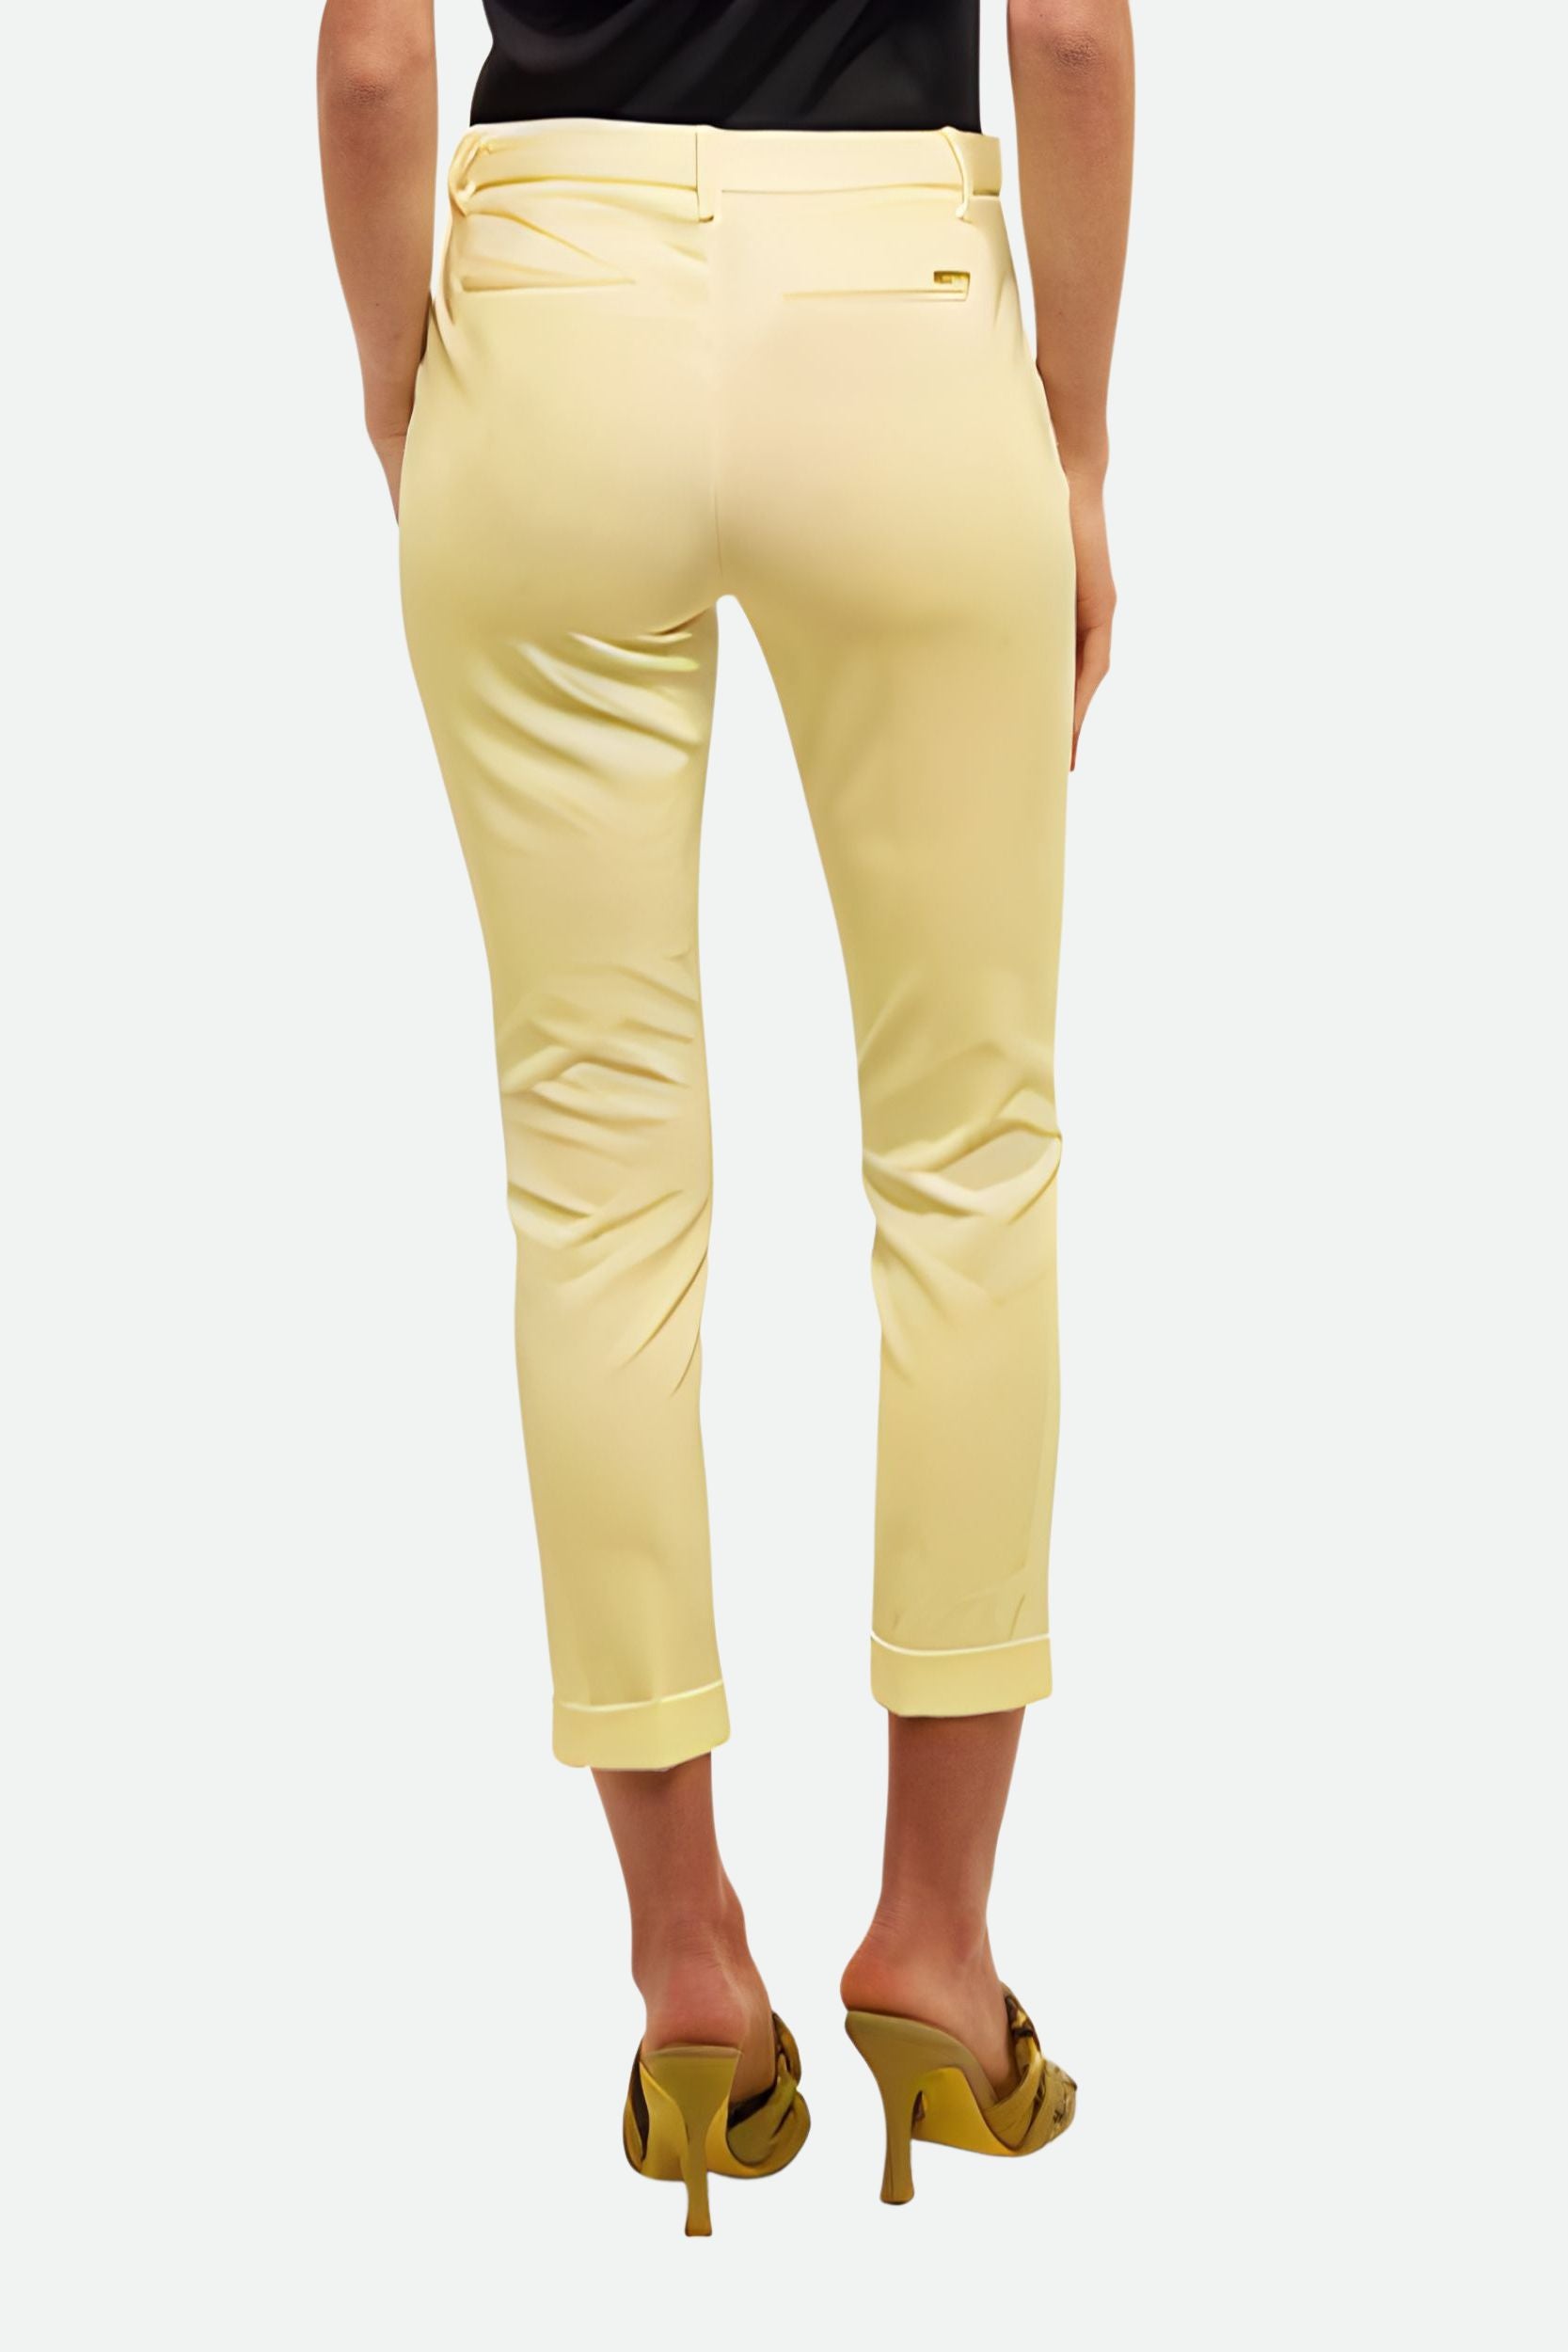 Liu Jo Yellow Trousers